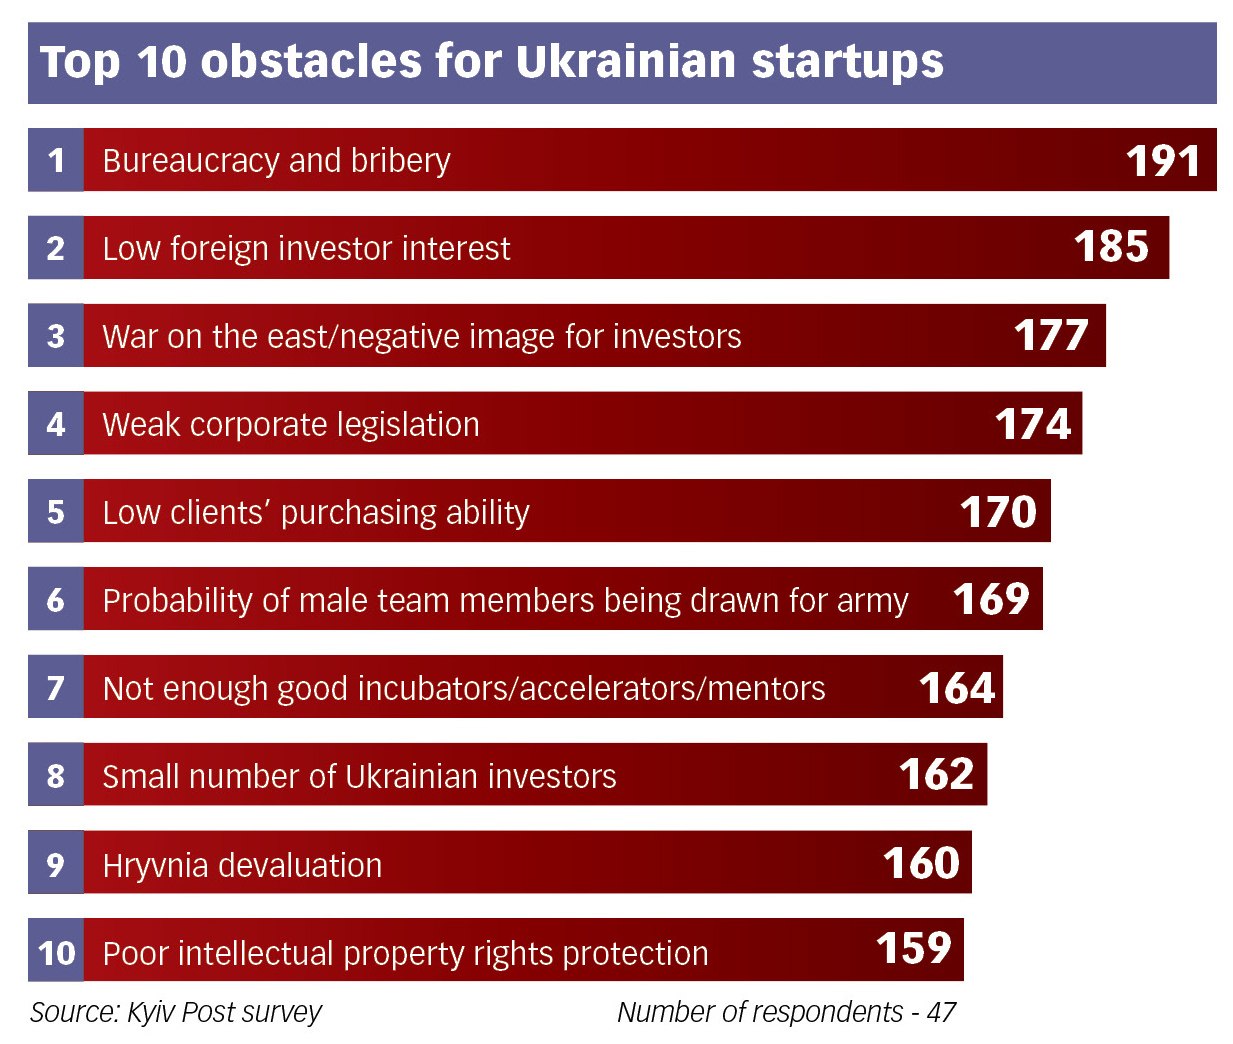 Top 10 obstacles for Ukrainian startups